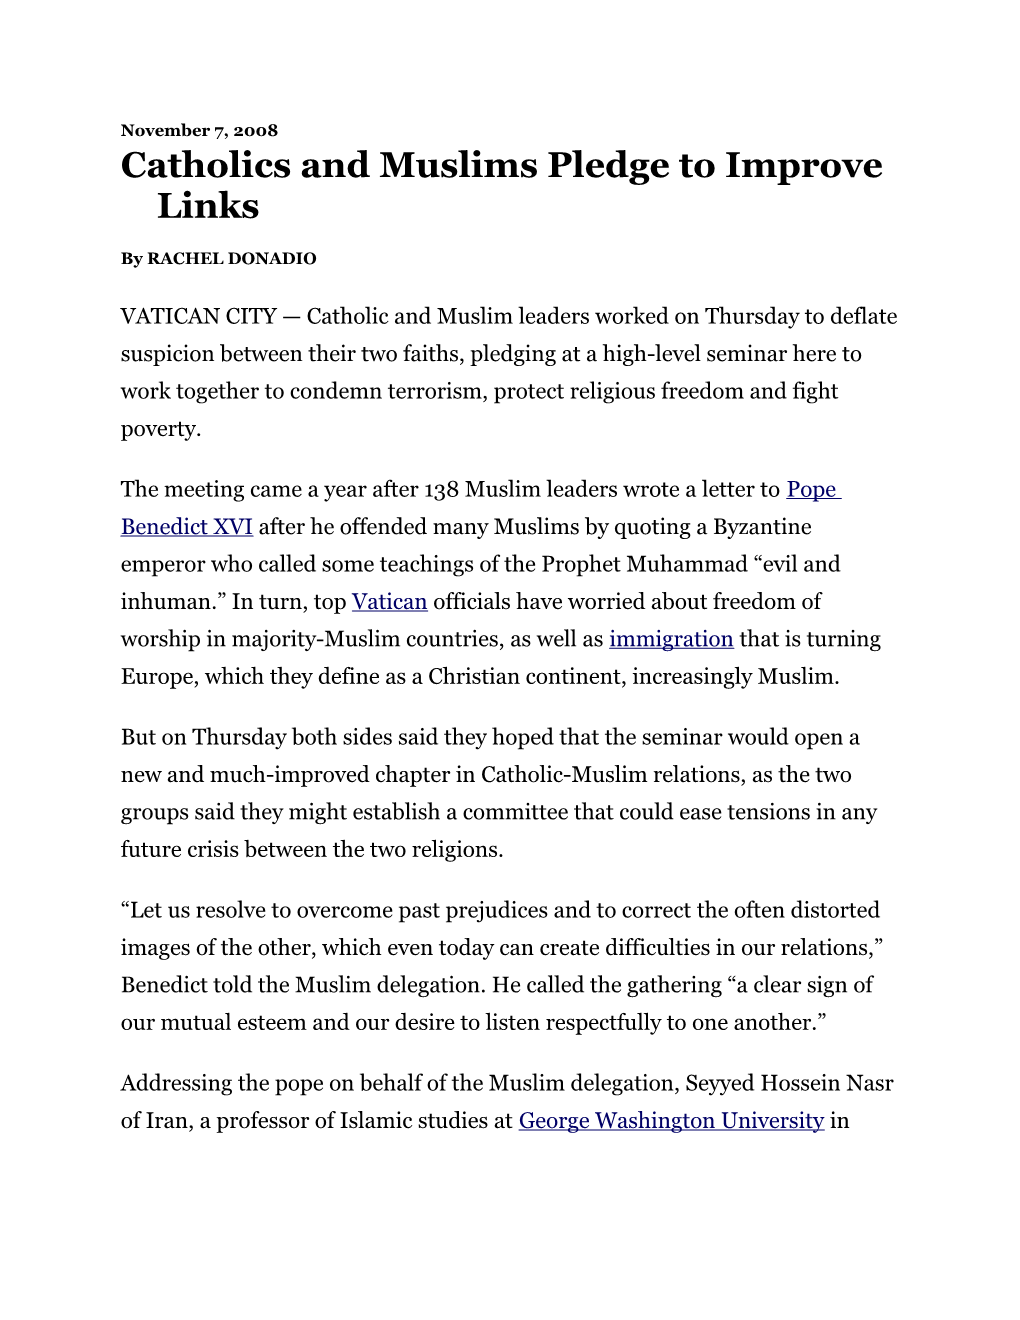 Catholics and Muslims Pledge to Improve Links